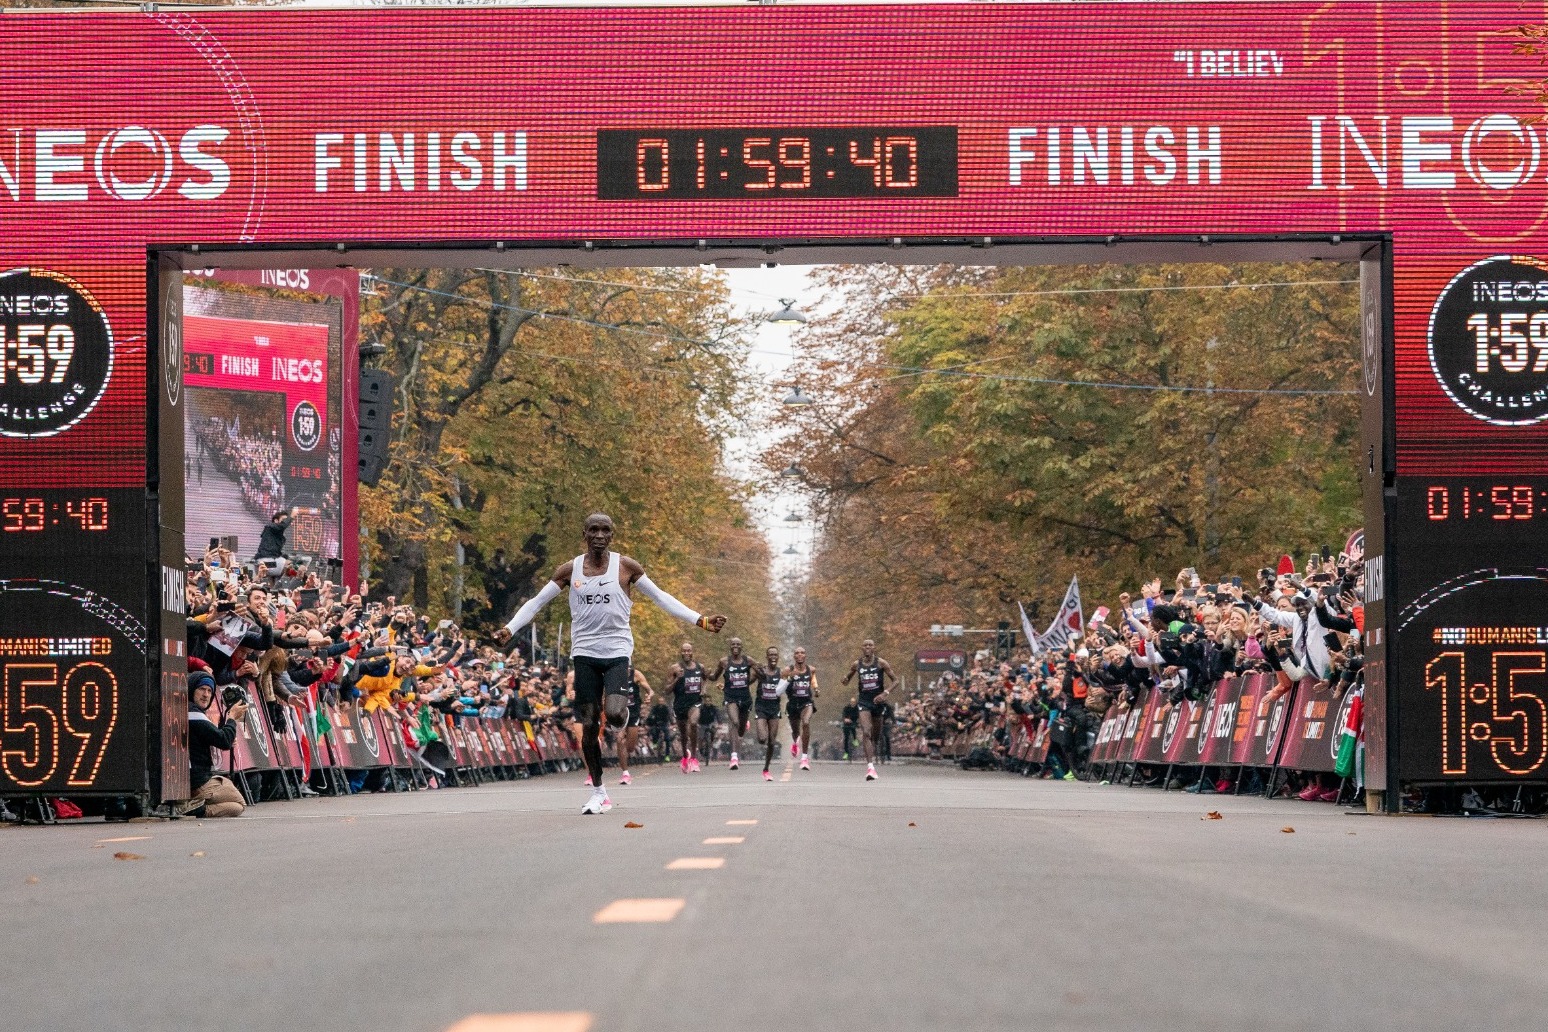 World’s fastest marathon runner says London race ‘is like my home’ 